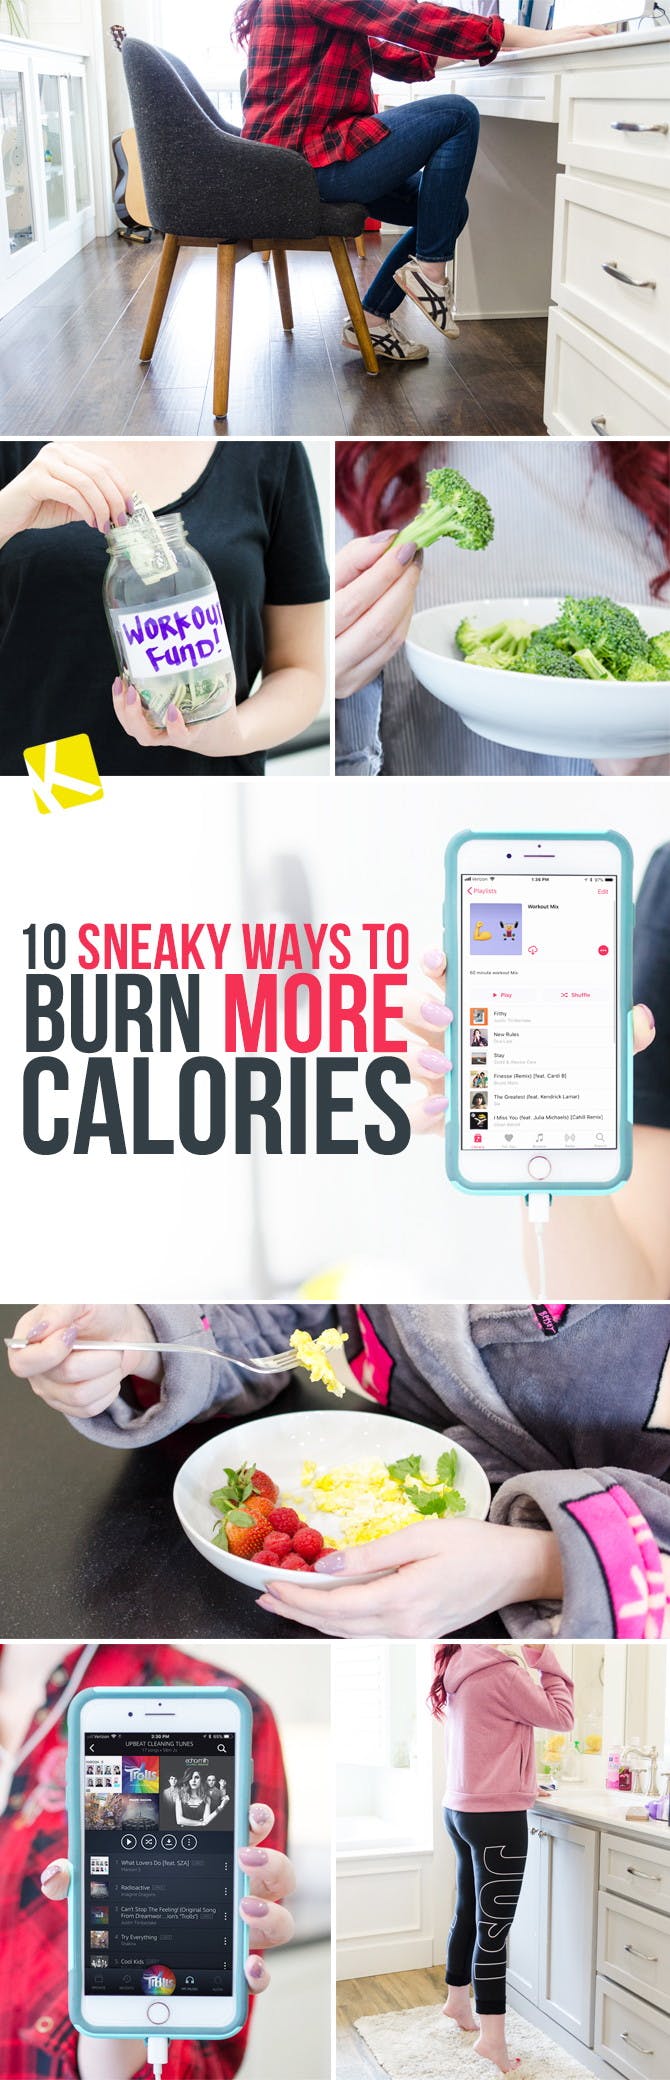 5 Sneaky Ways to Burn More Calories